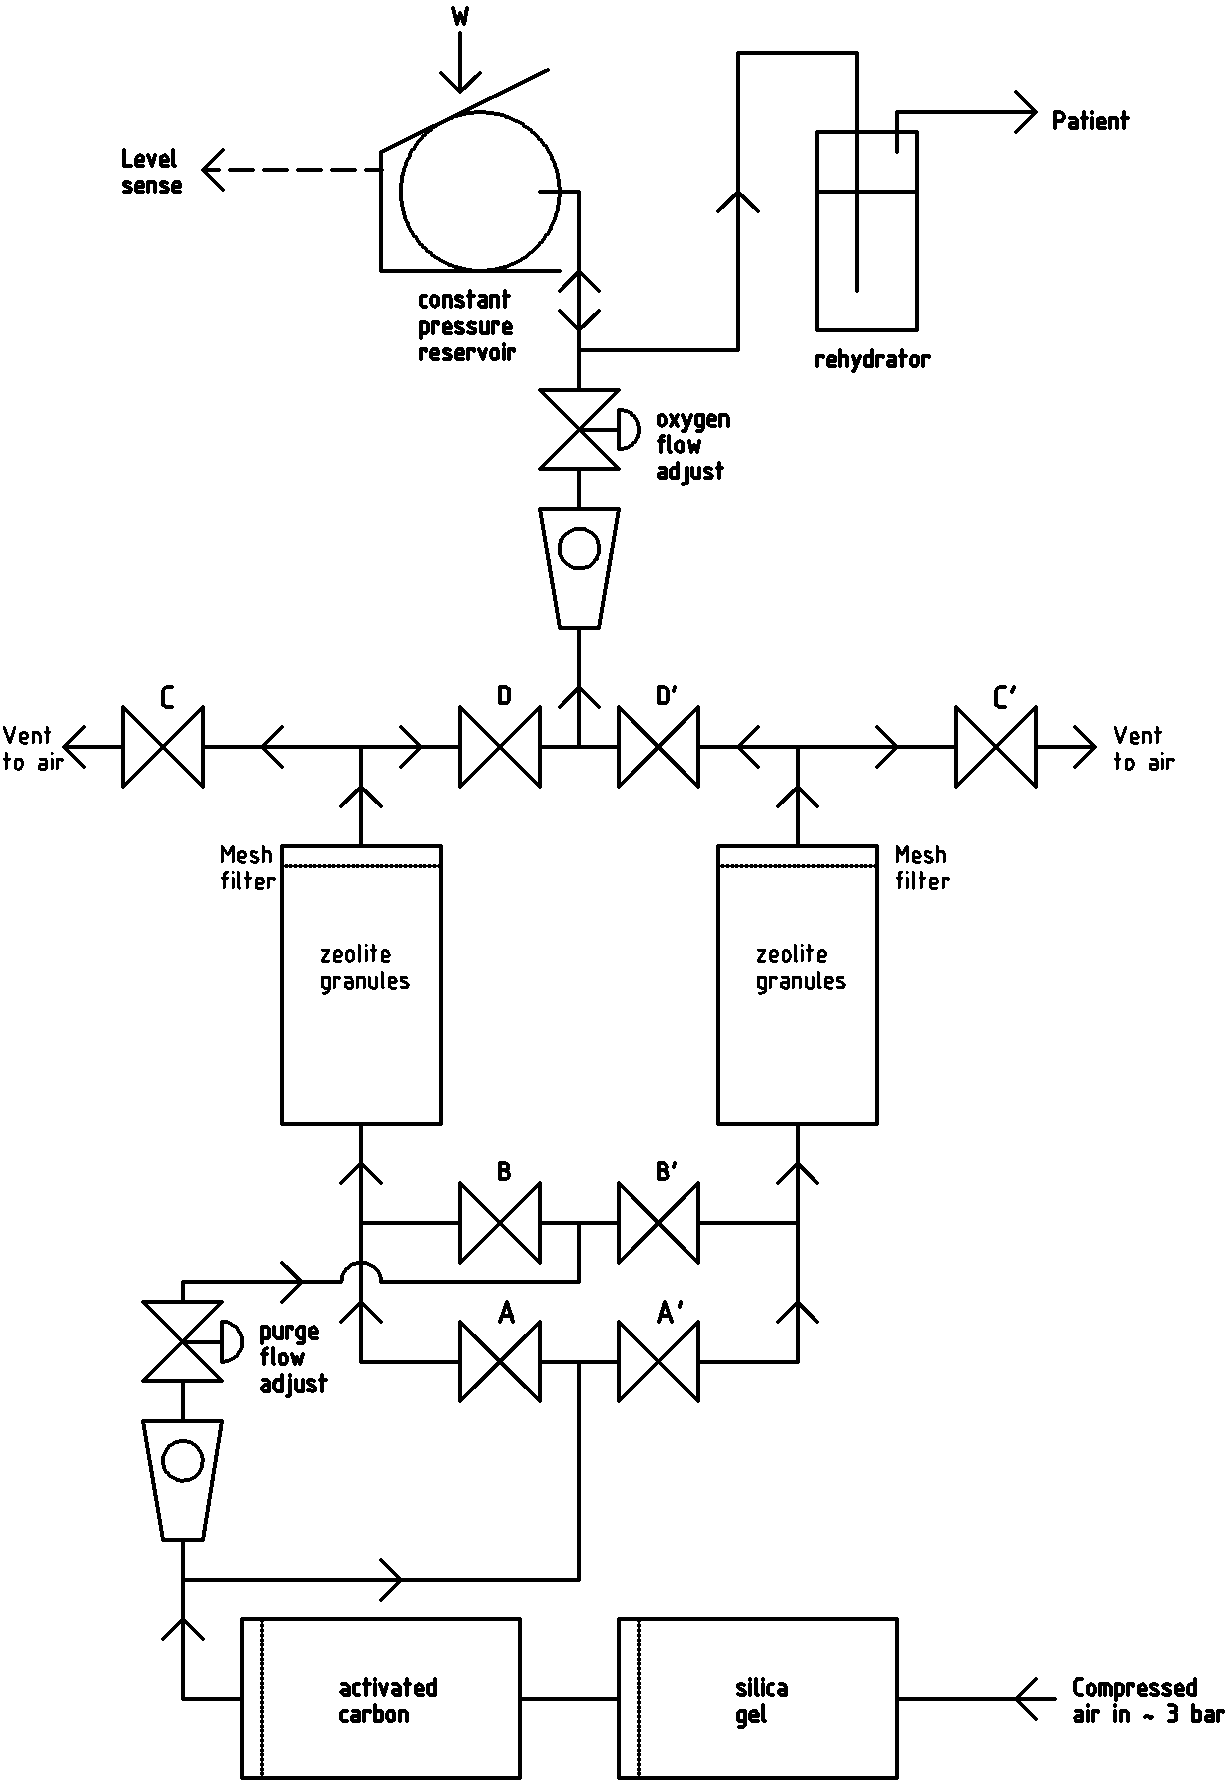 Oxygen concentrator block diagram